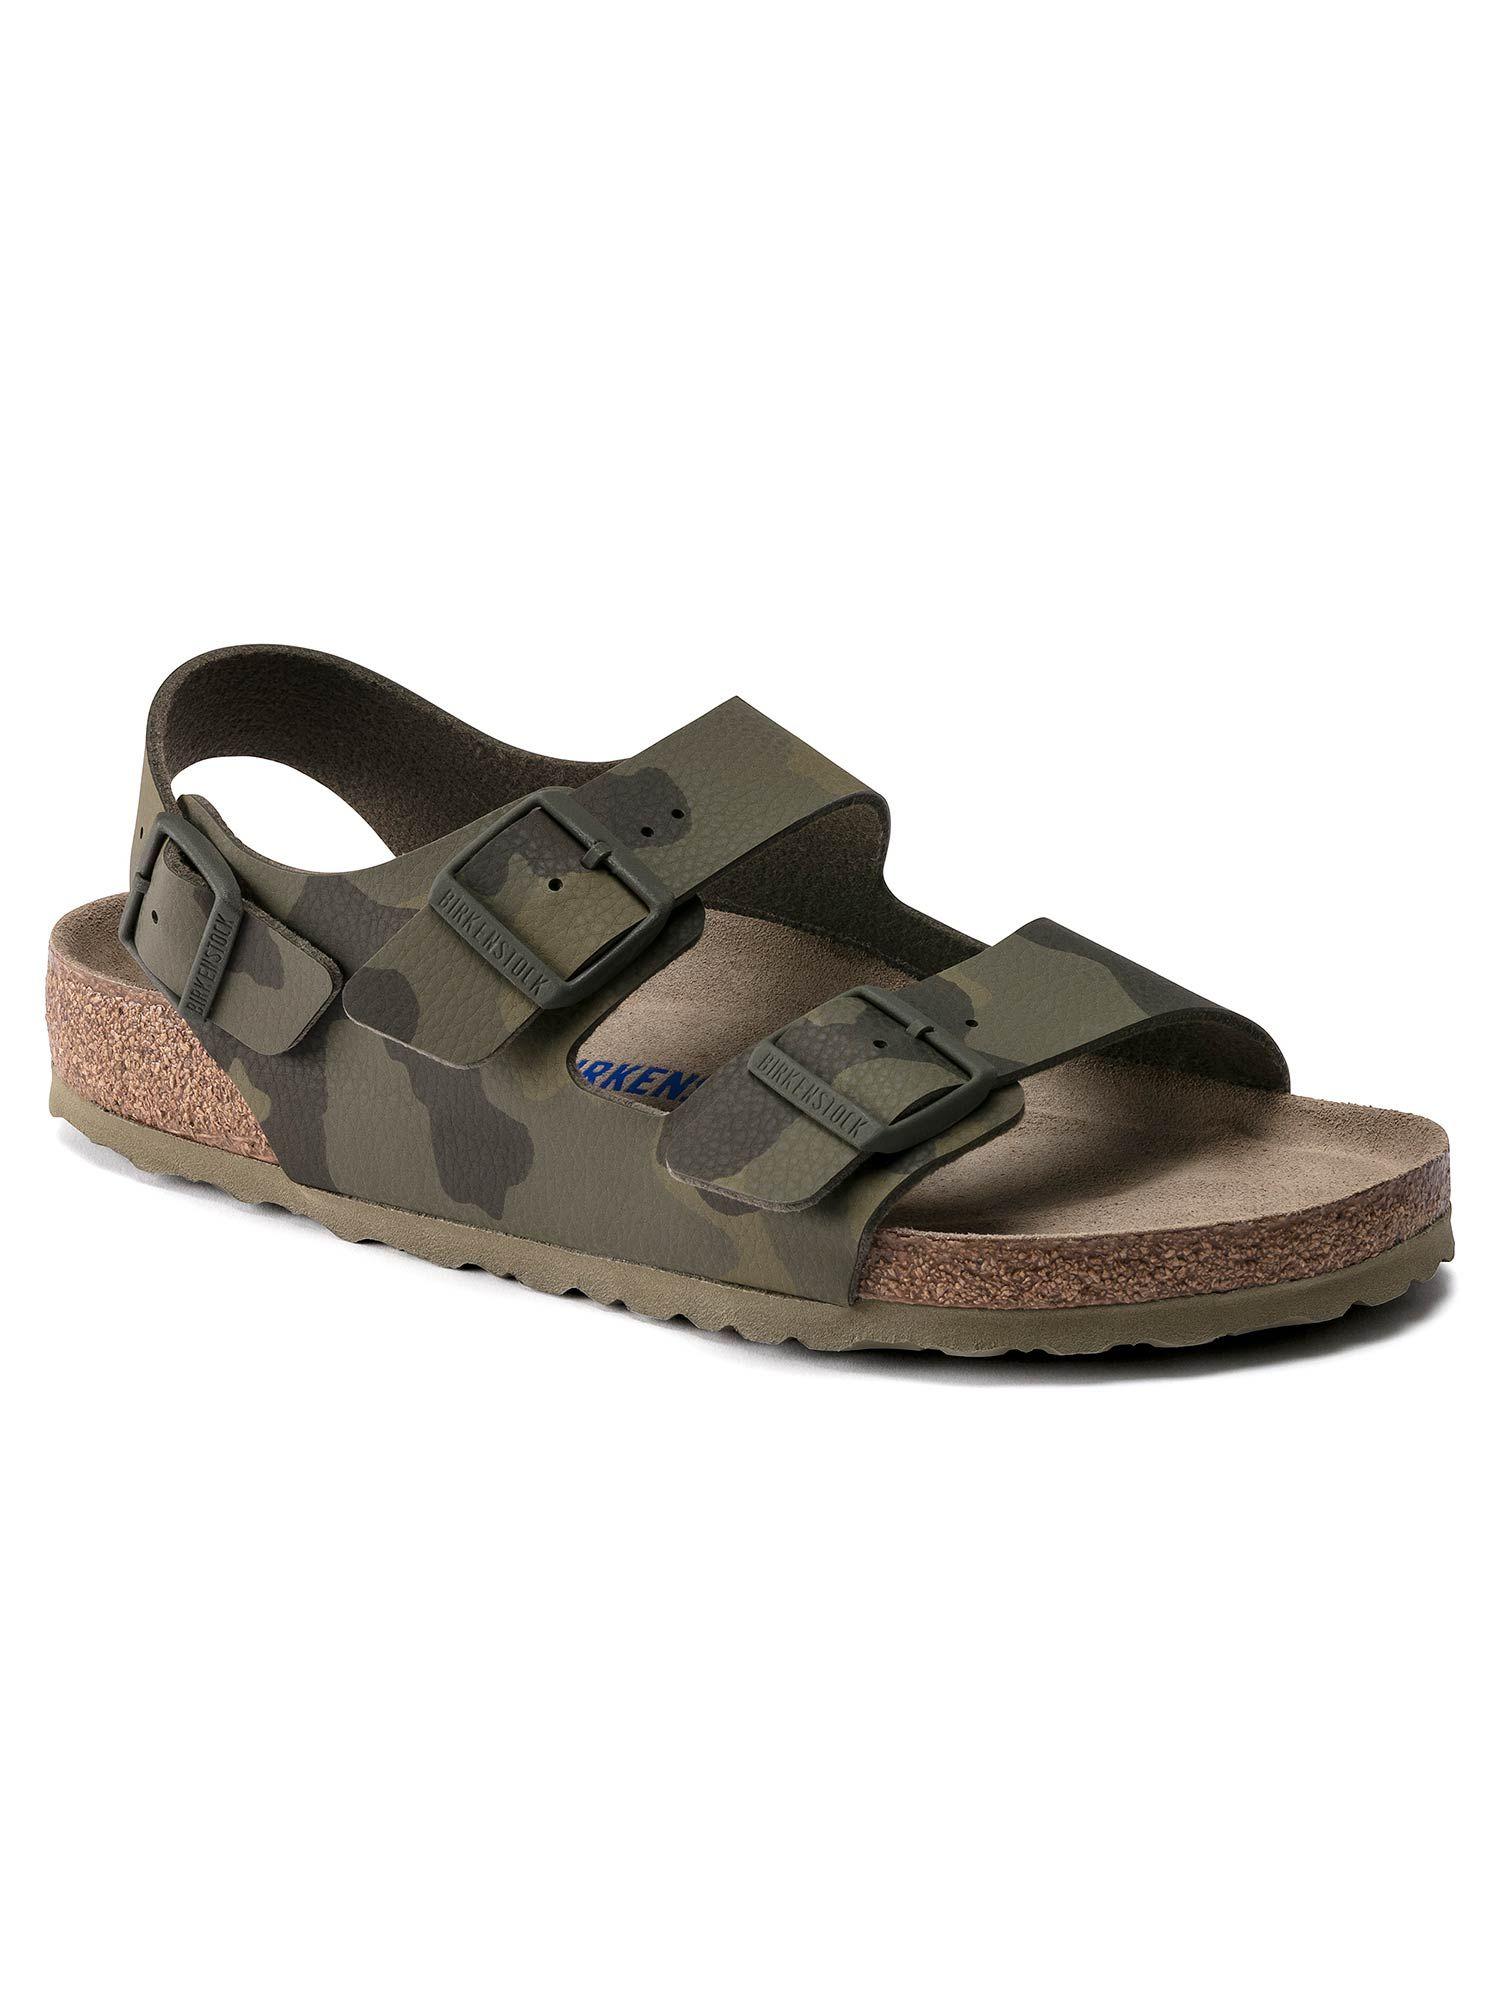 milano-soft-footbed-birko-flor-green-regular-width-mens-sandals